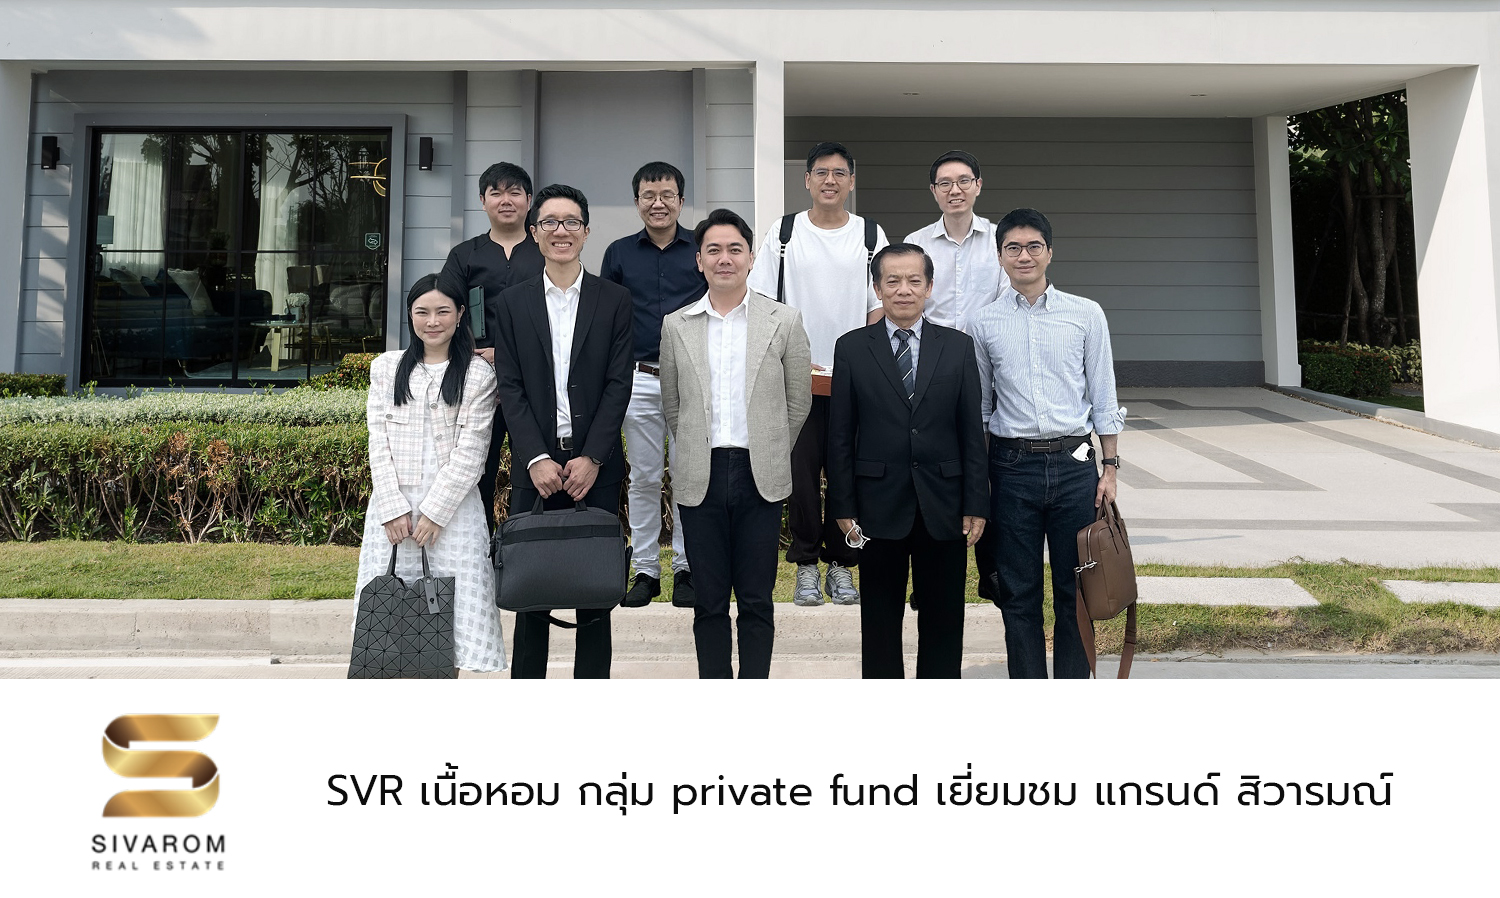 SVR เนื้อหอม กลุ่ม private fund เยี่ยมชม แกรนด์ สิวารมณ์